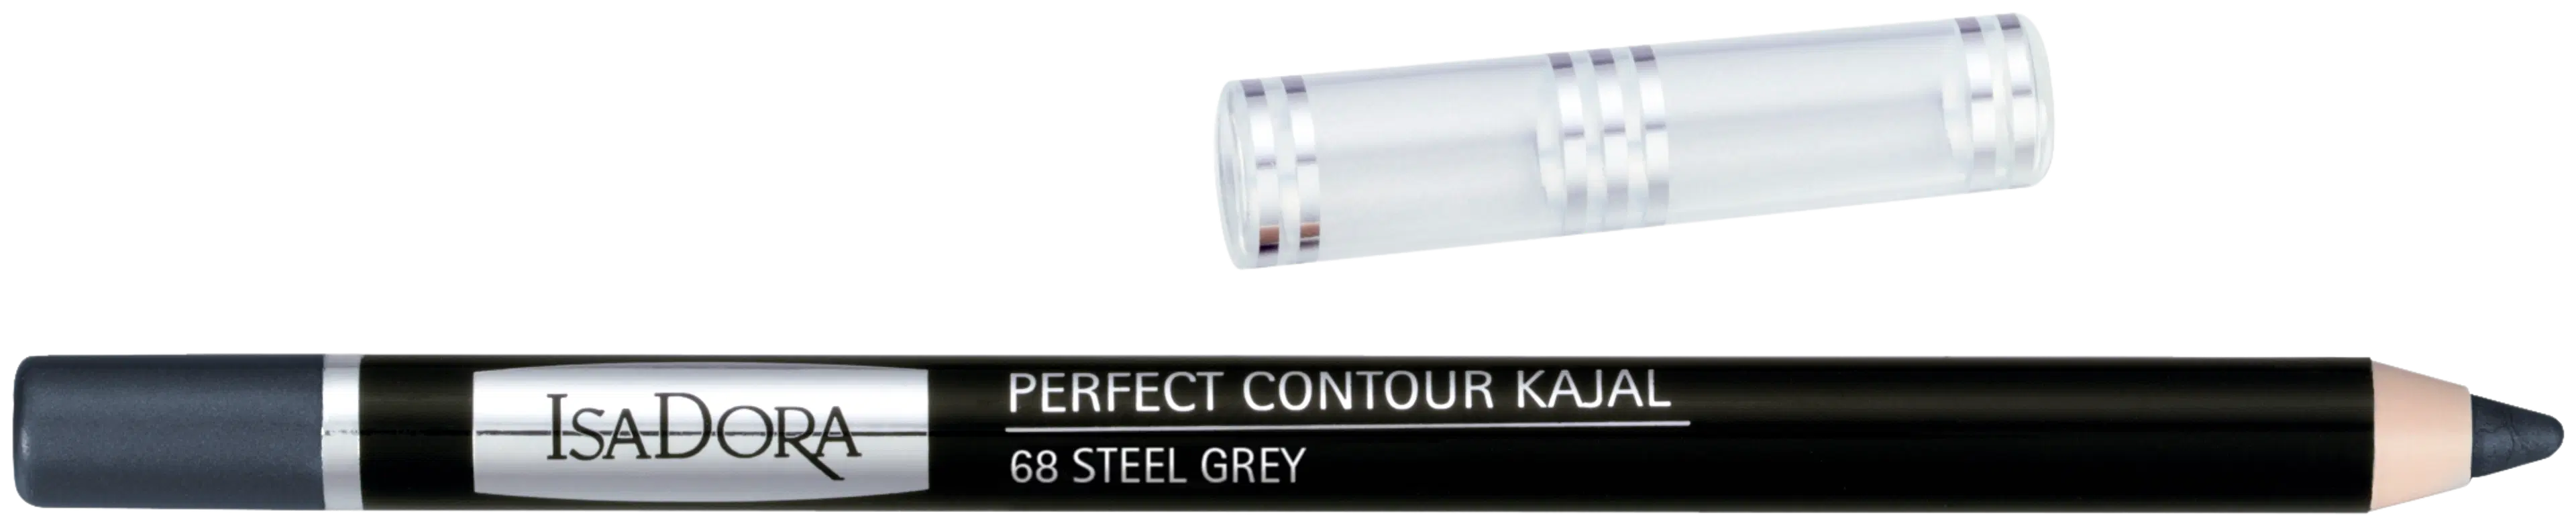 IsaDora Perfect Contour Kajal 68 Steel Grey